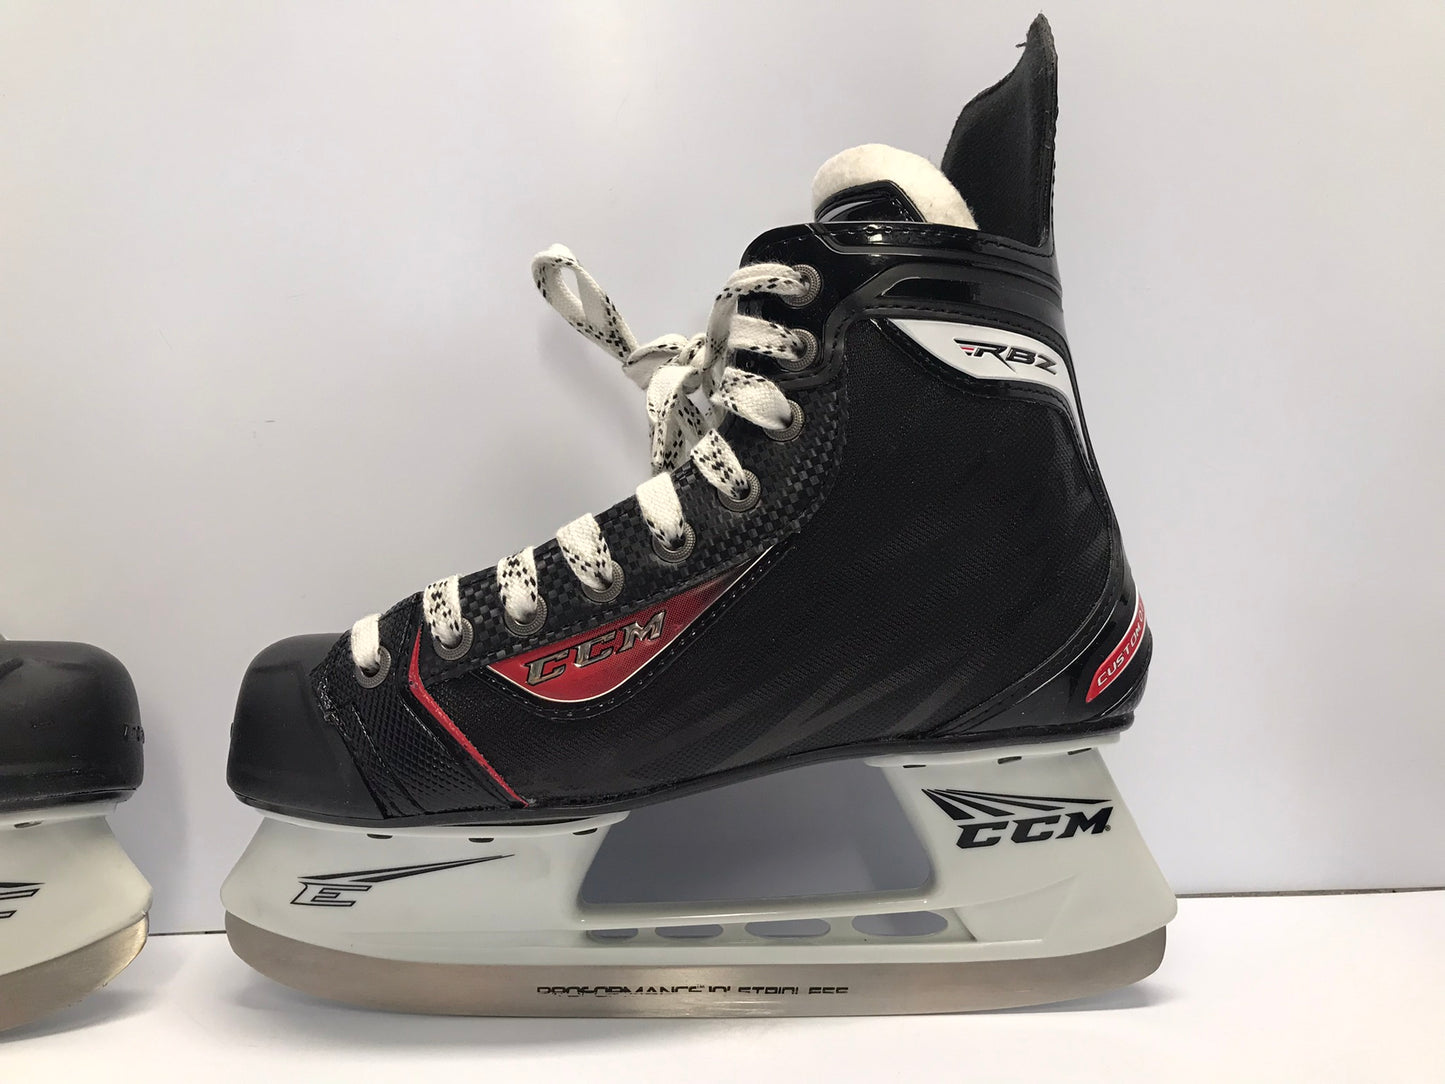 Hockey Skates Men's Size 7 Shoe 5.5 Skate Size CCM RBZ New